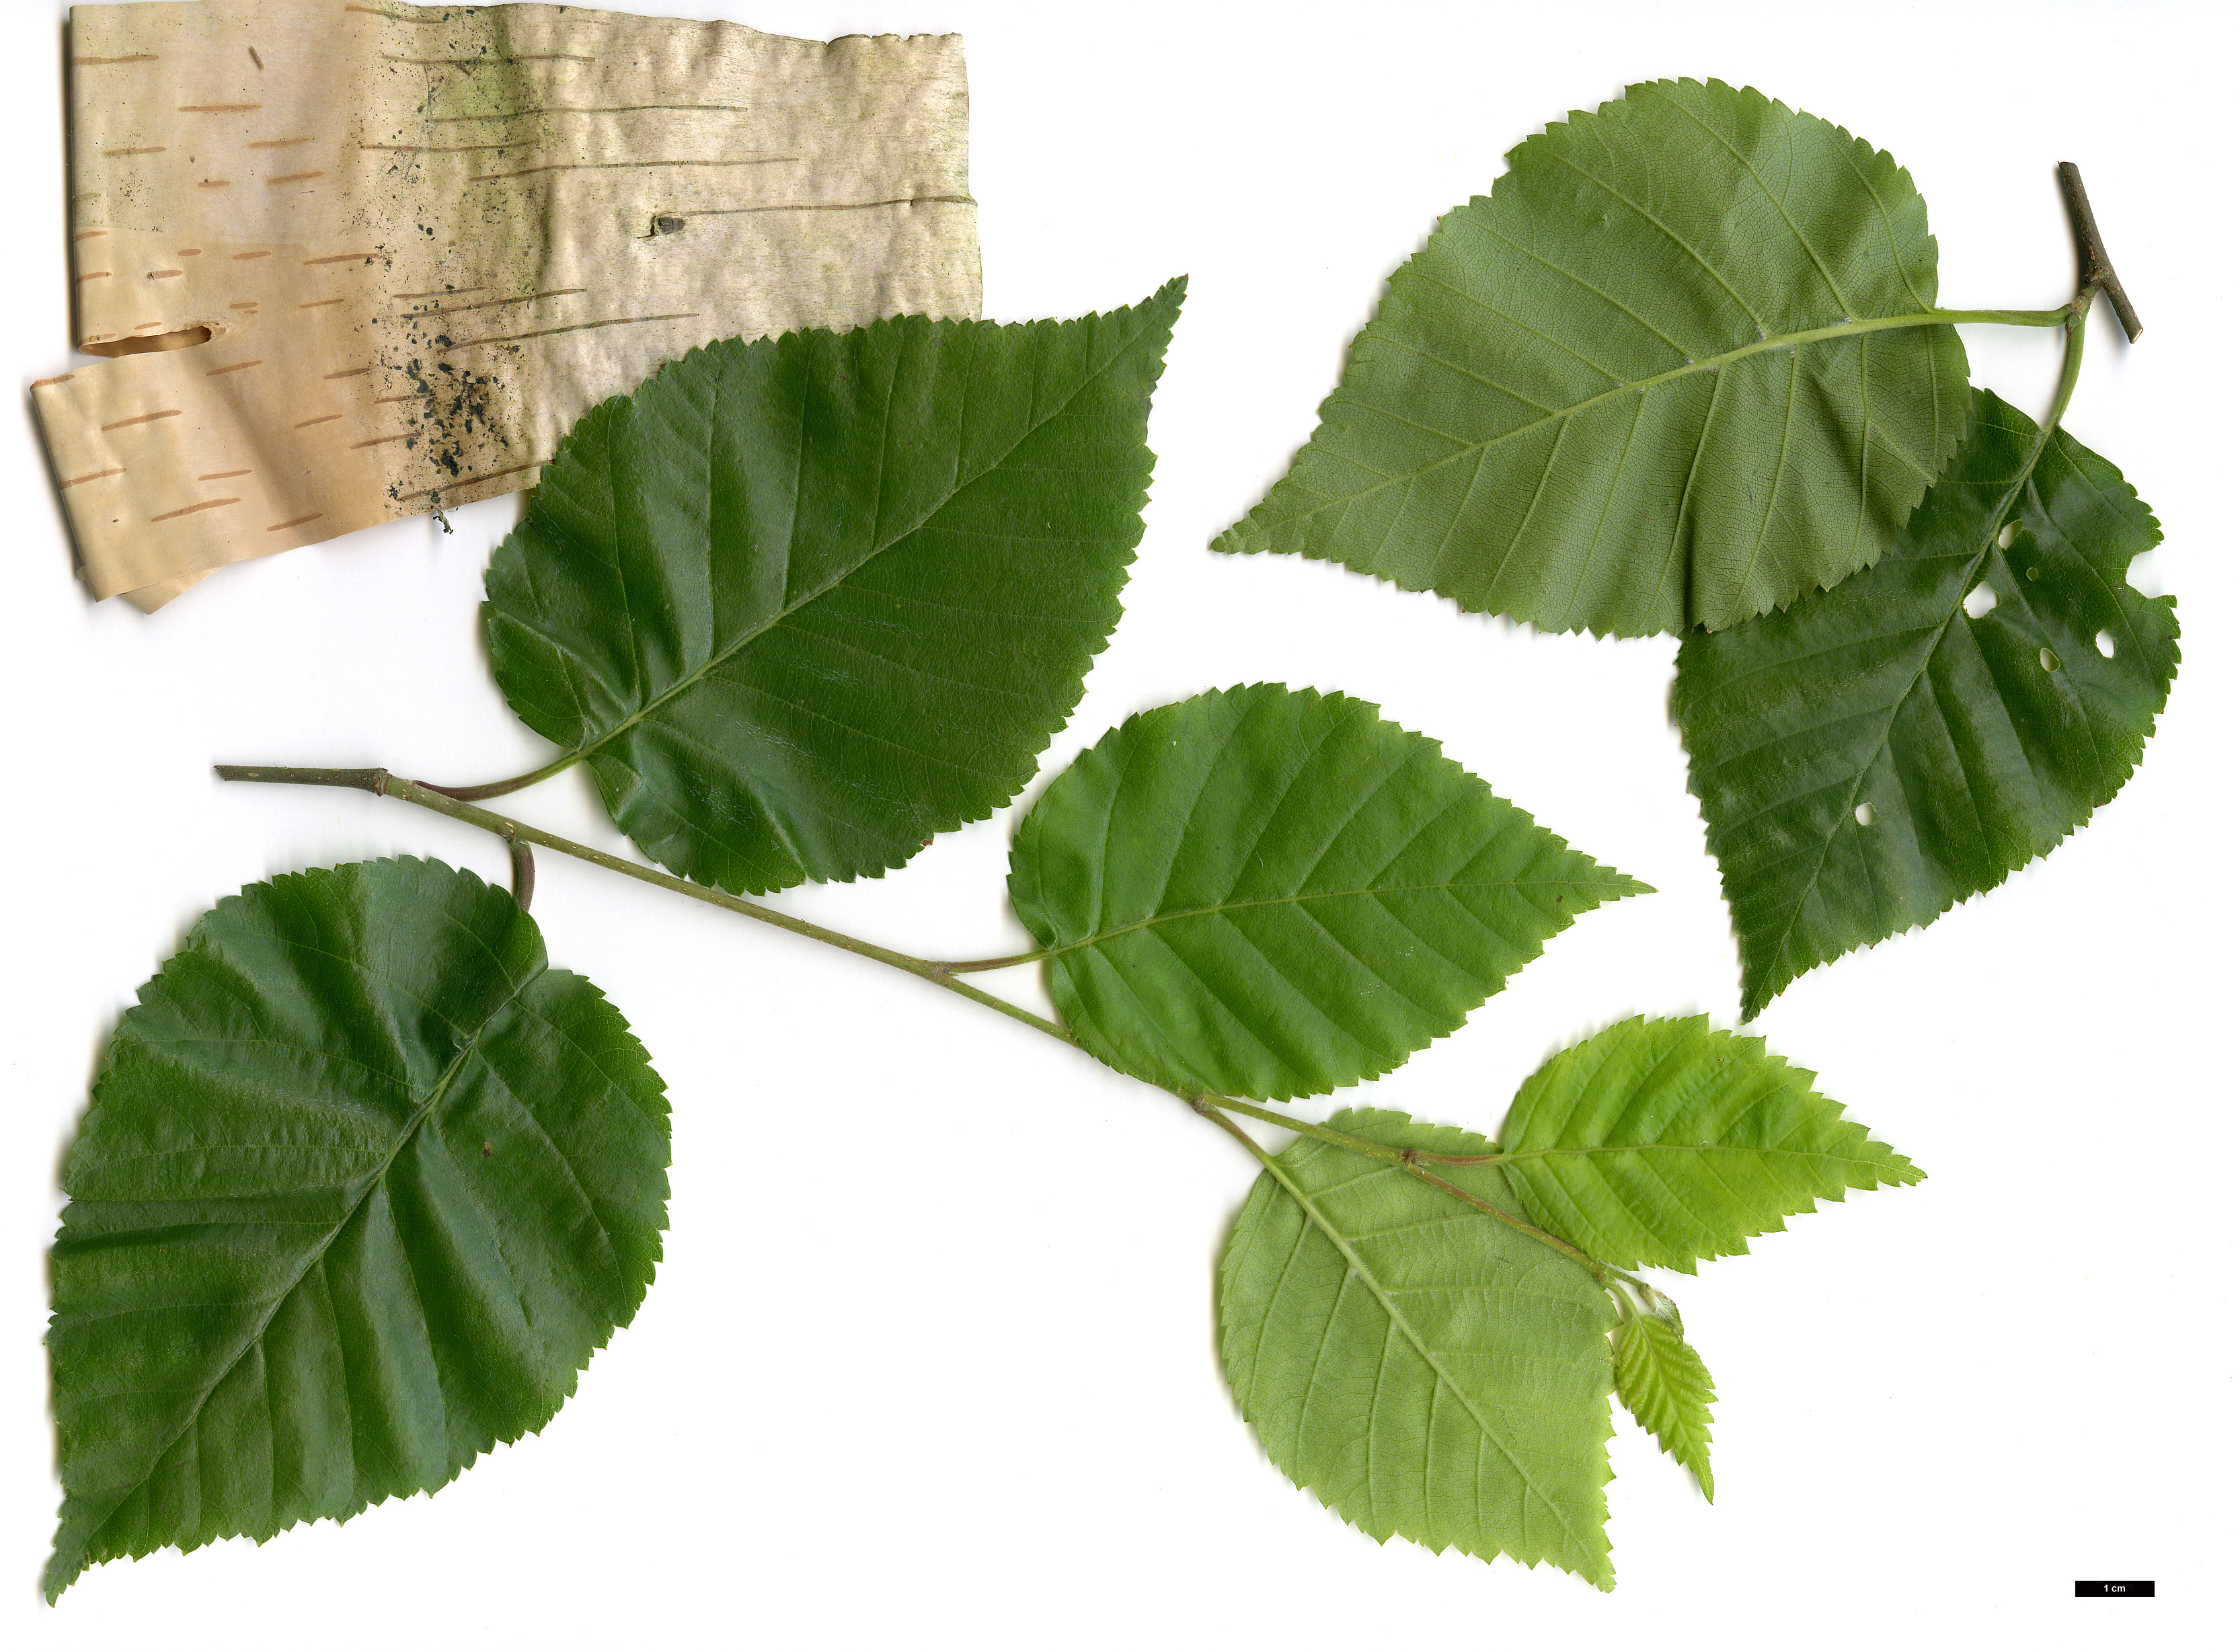 High resolution image: Family: Betulaceae - Genus: Betula - Taxon: utilis - SpeciesSub: subsp. jacquemontii